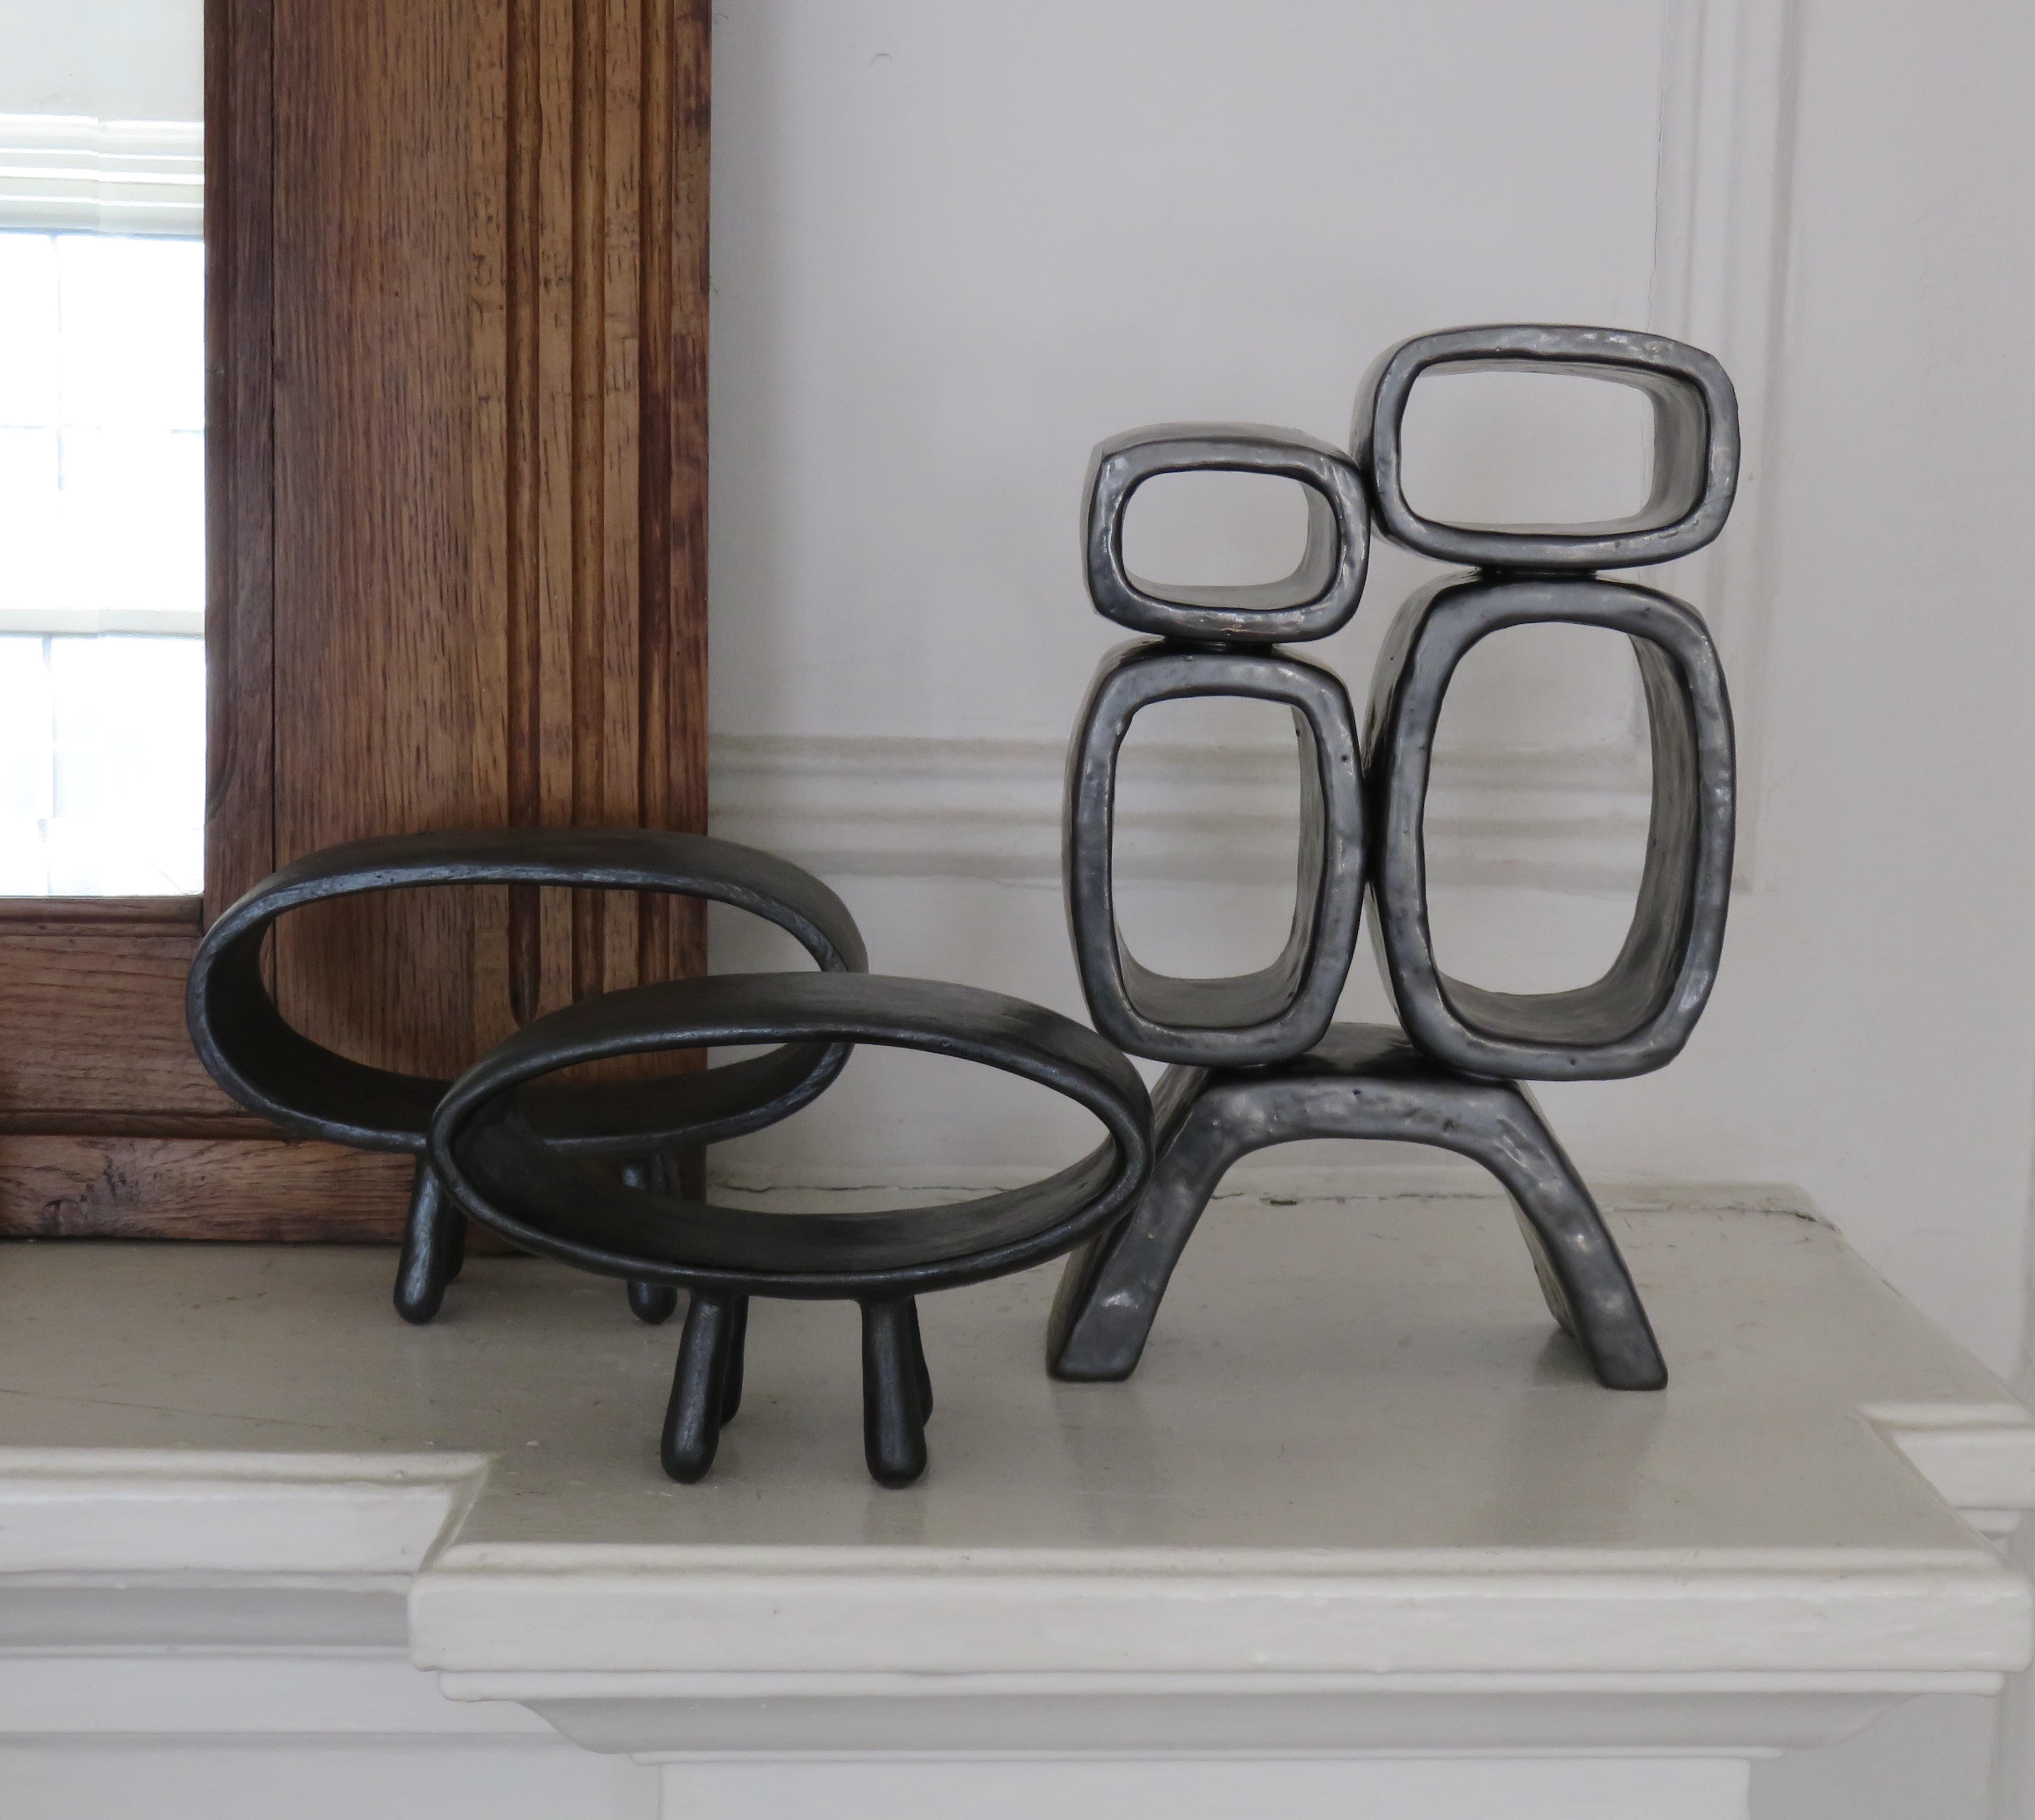 Metallic Black Hand-Built Ceramic Sculpture With 4 Rectangular Rings on Legs 6